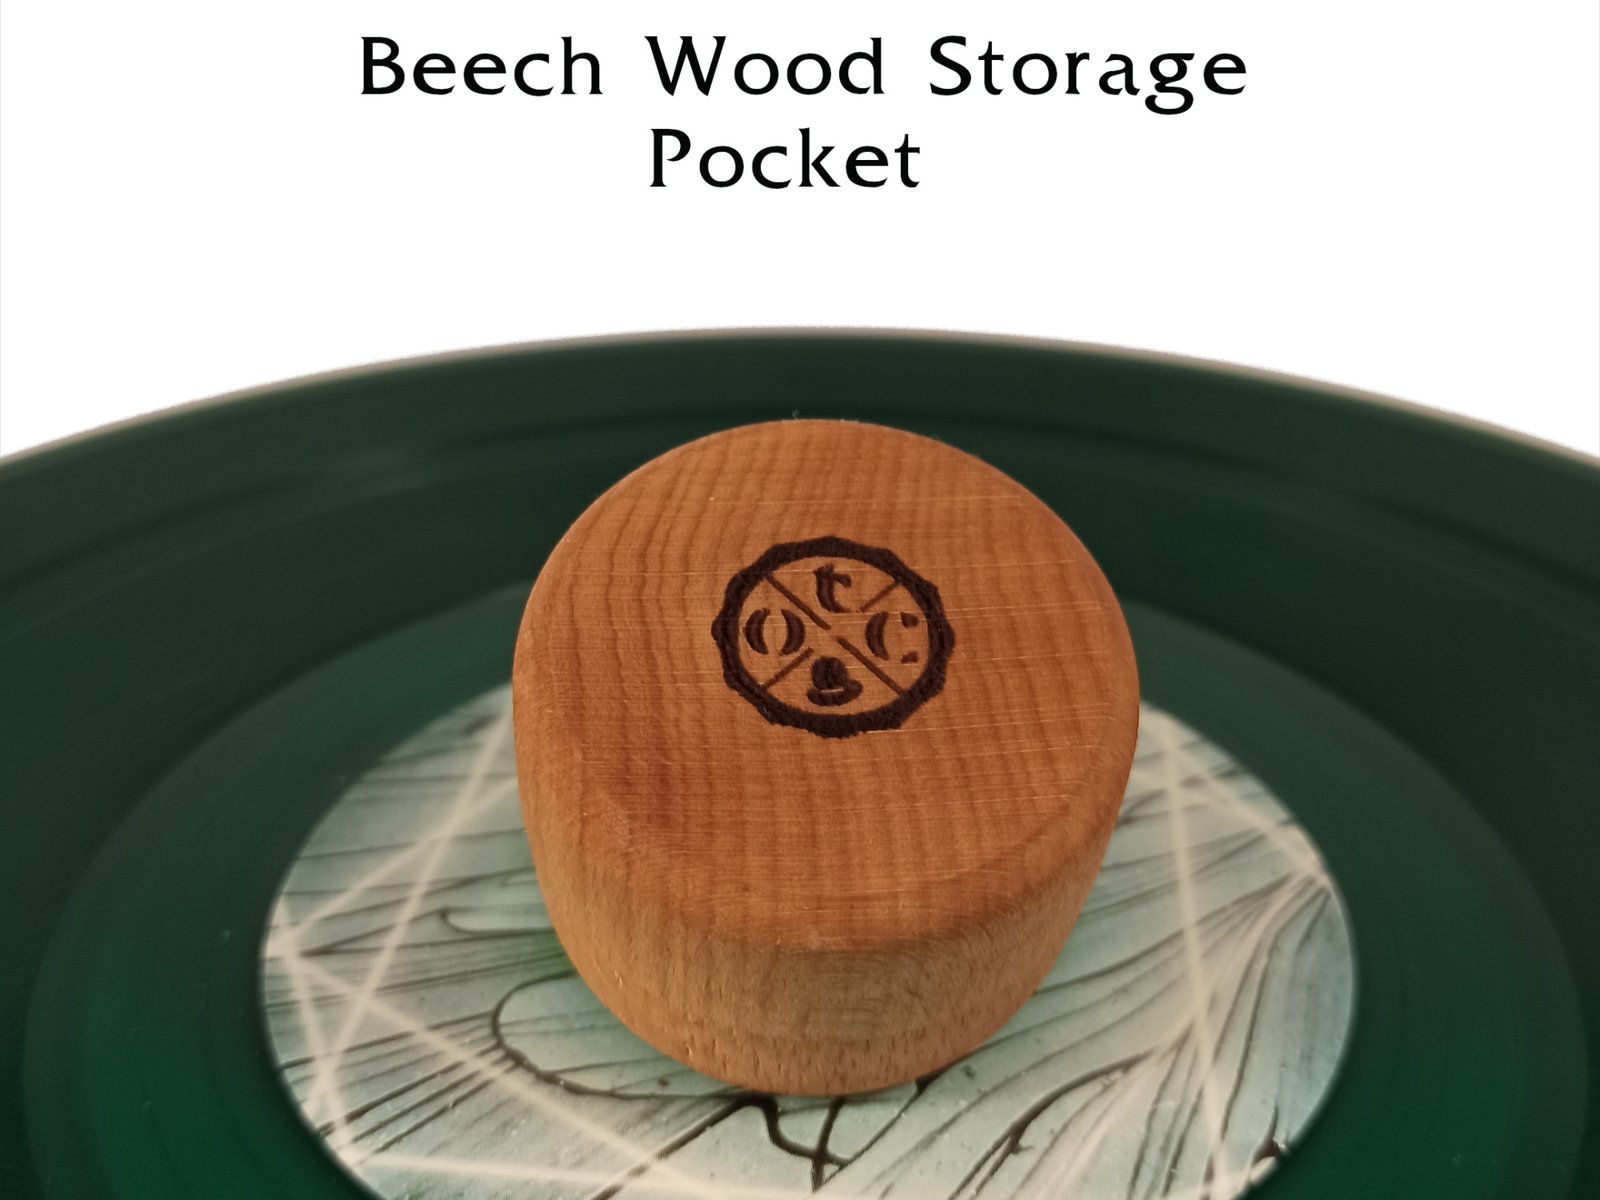 Beech wood storage pocket